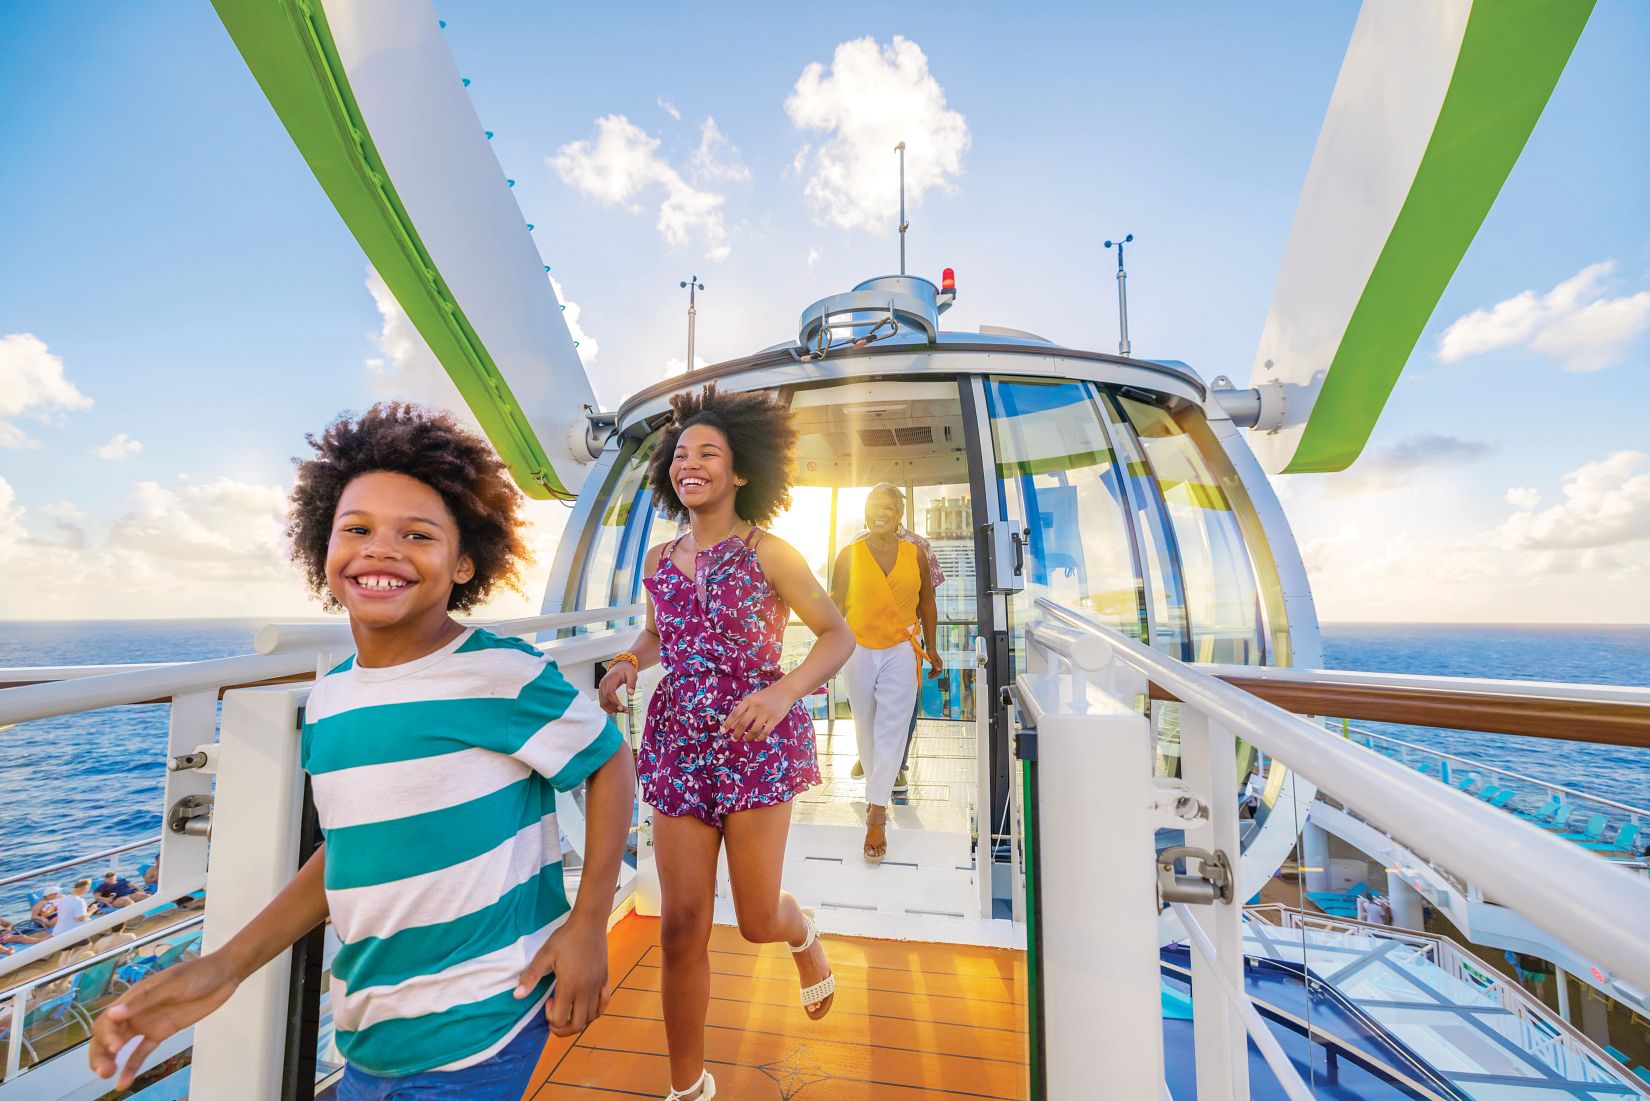 The First Day on a Royal Caribbean Cruise | Royal Caribbean Blog